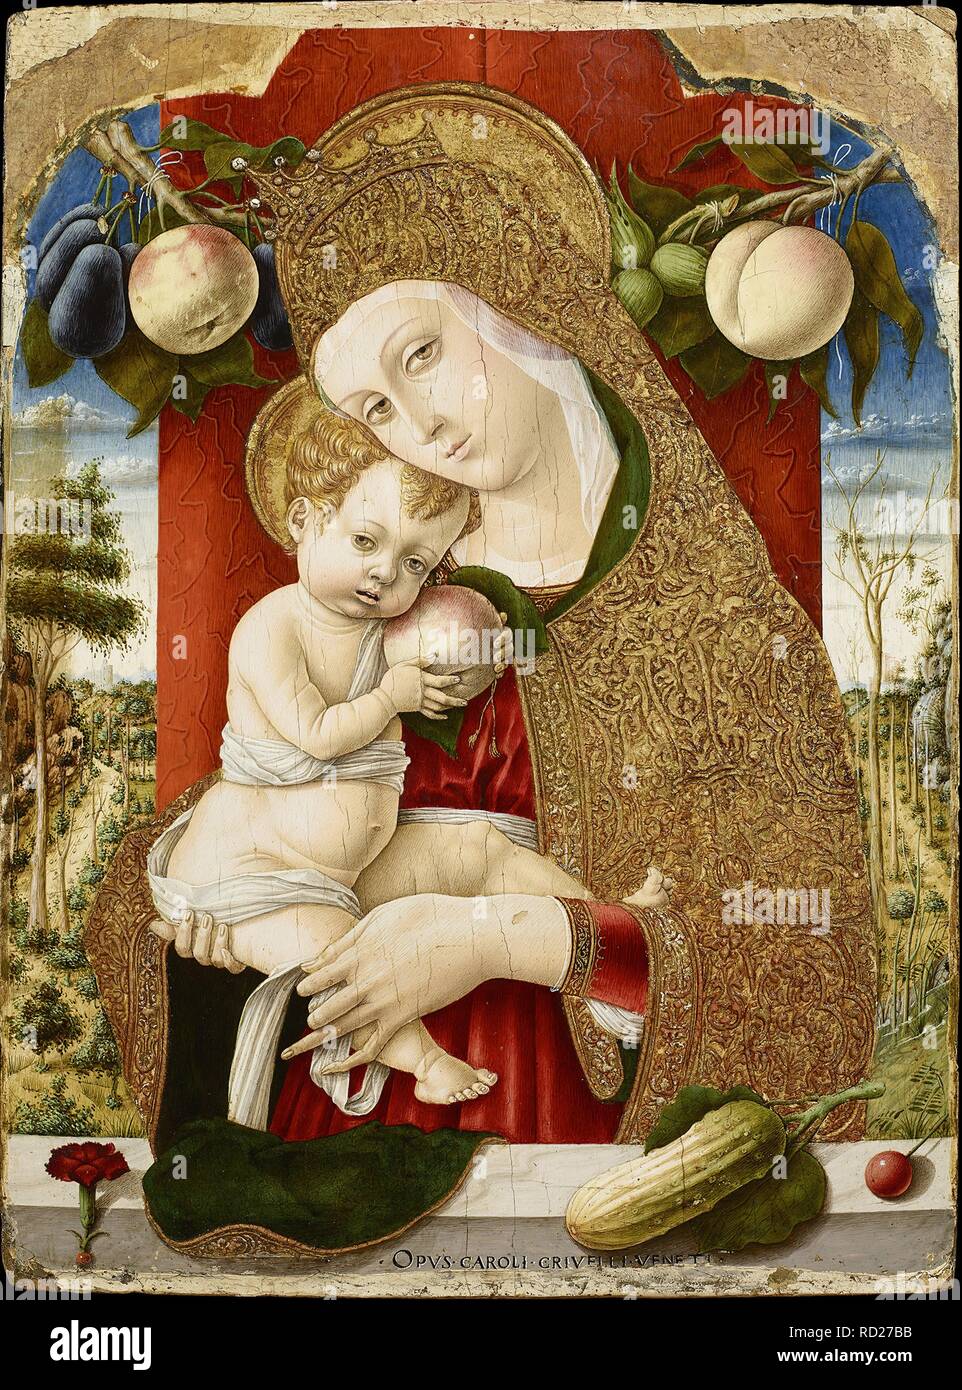 Virgin and Child. Museum: Accademia Carrara, Bergamo. Author: CRIVELLI, CARLO. Stock Photo